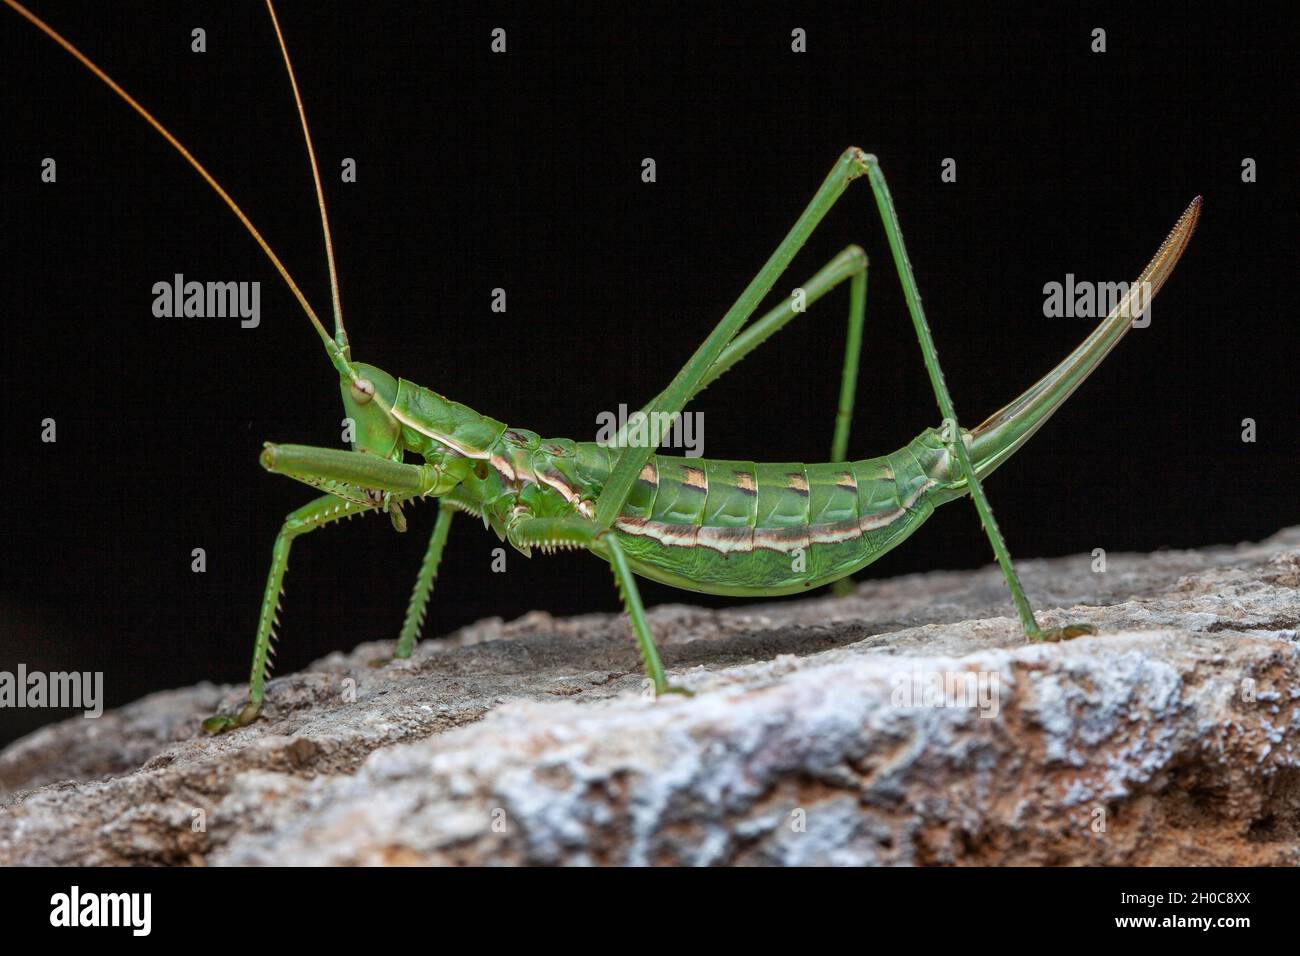 Predatory Bush Cricket (Saga pedo) on black background, Saint-Jean-de-Bueges, Herault, France. Stock Photo